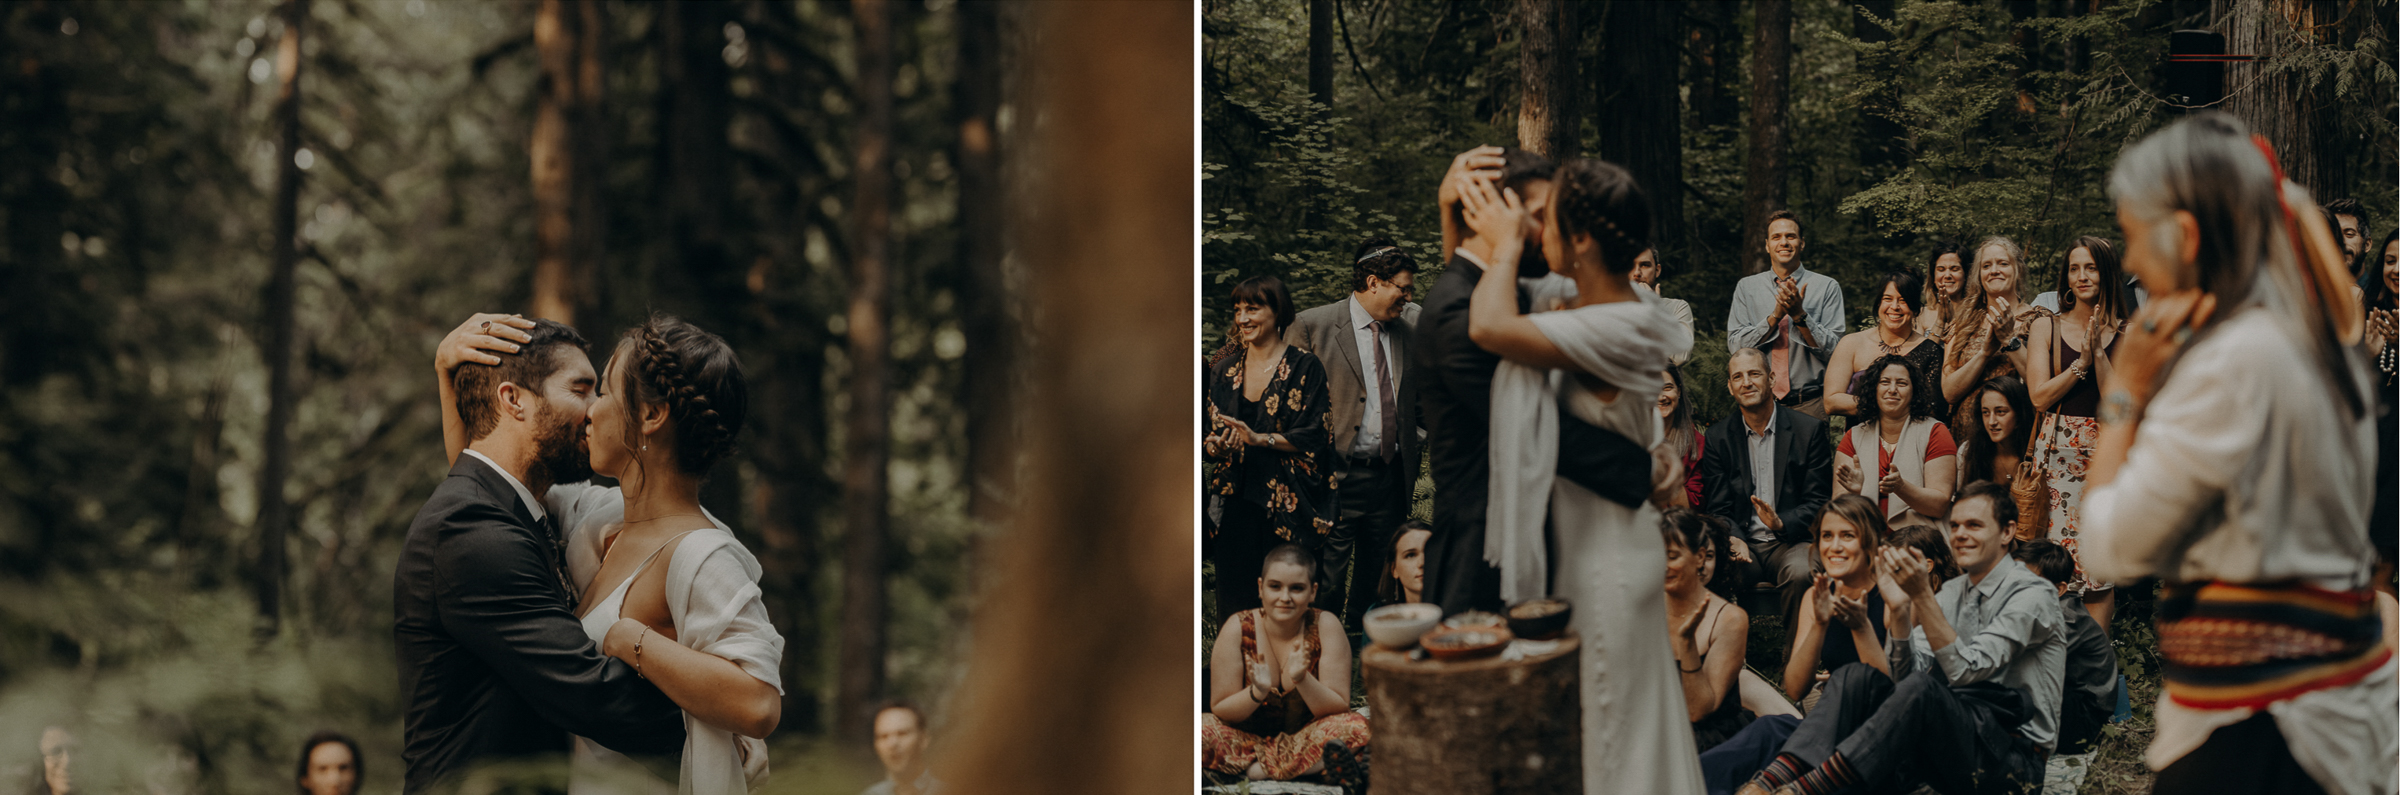 Isaiah + Taylor Photography - Camp Colton Wedding, Los Angeles Wedding Photographer-072.jpg